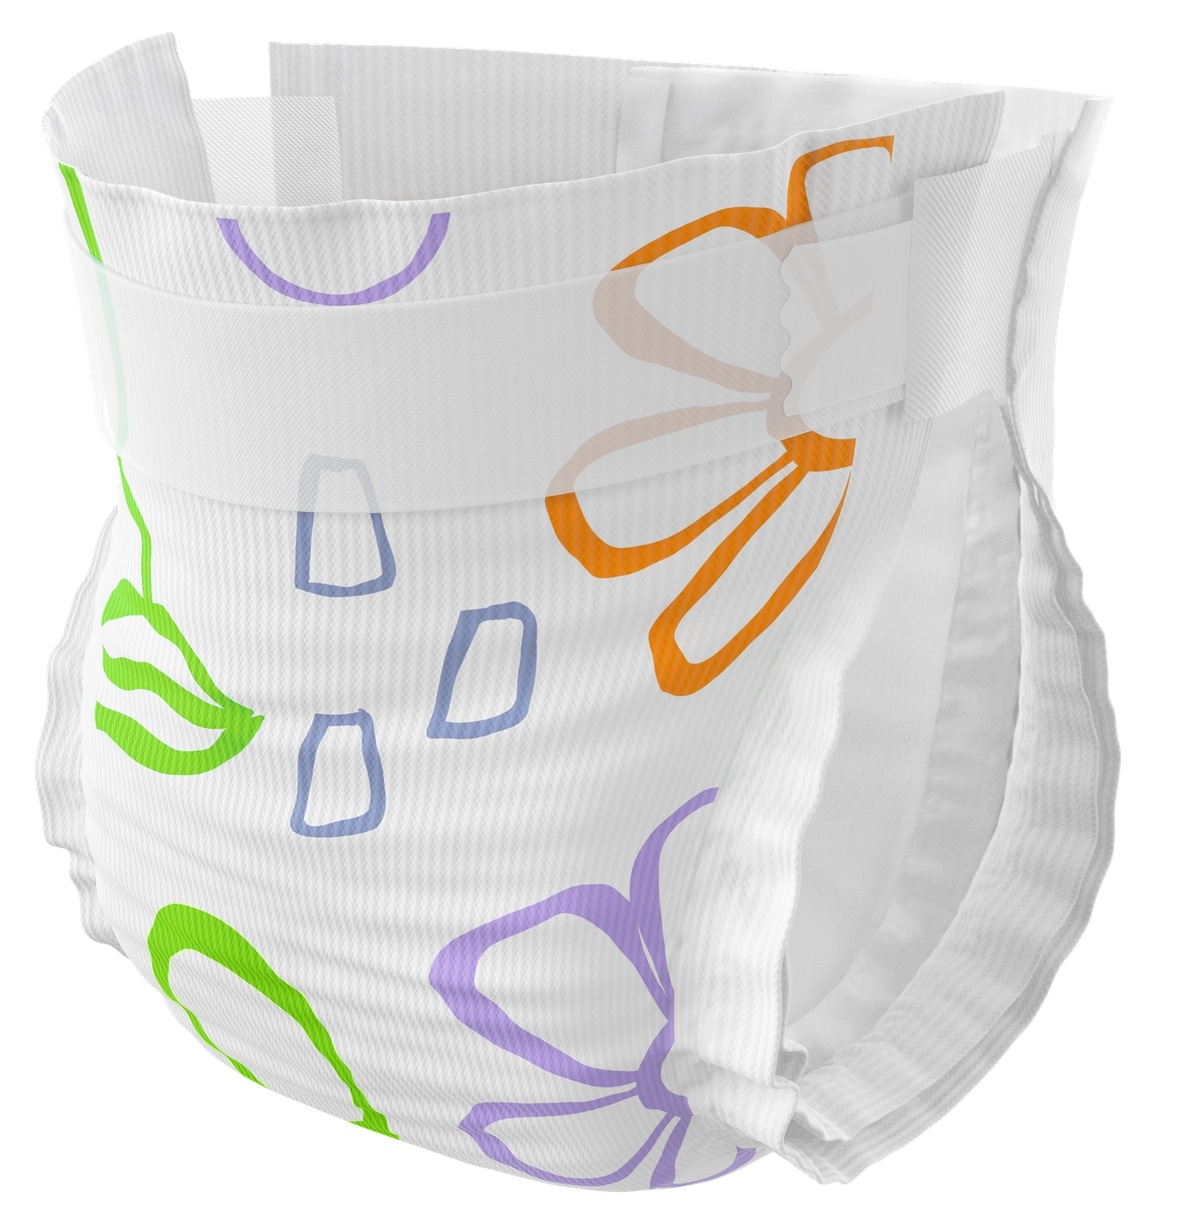 Full Tum, Dry Bum free formula & diaper program launched by CFRC